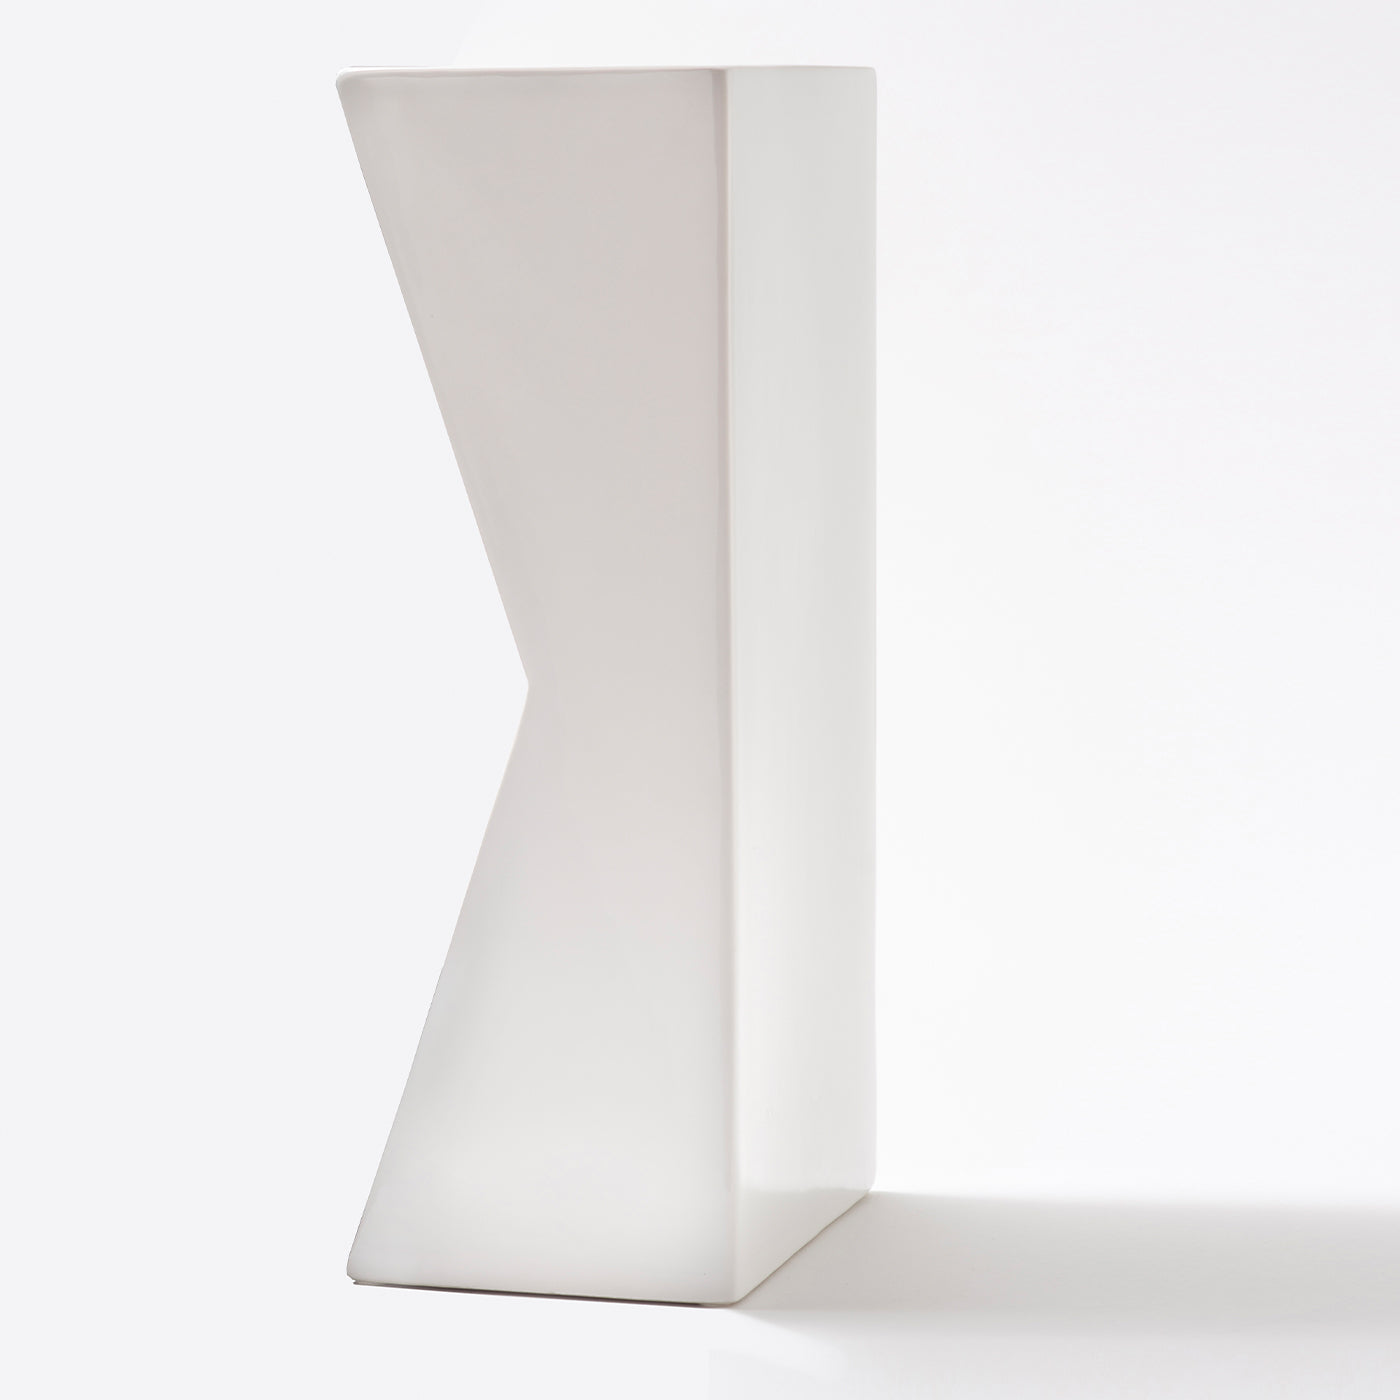 Verso White Vase by Antonio Saporito - Alternative view 1